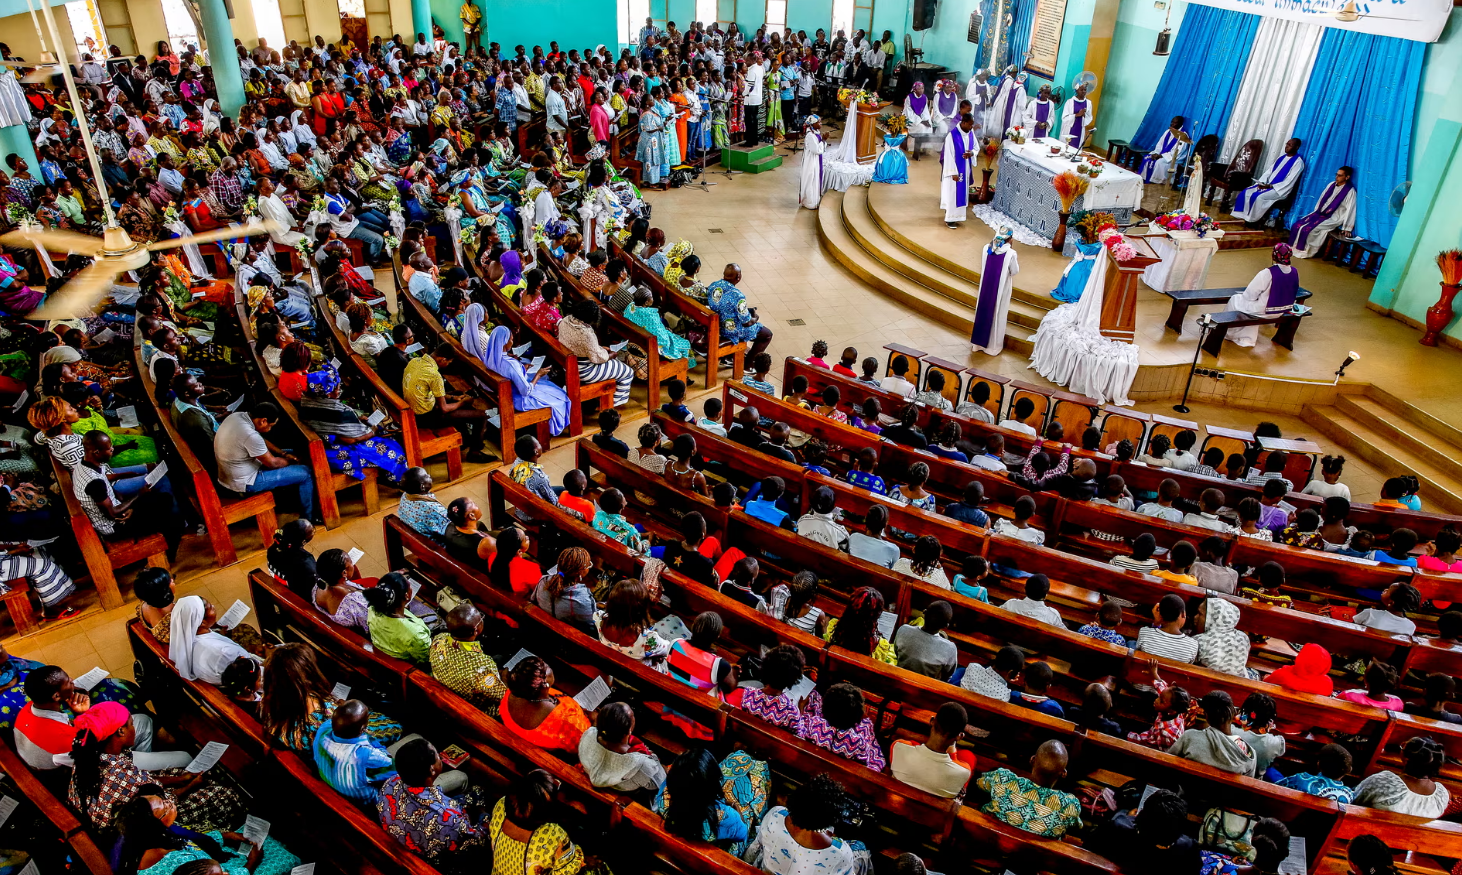 Raiders kill at least a dozen worshippers at Burkina Faso church